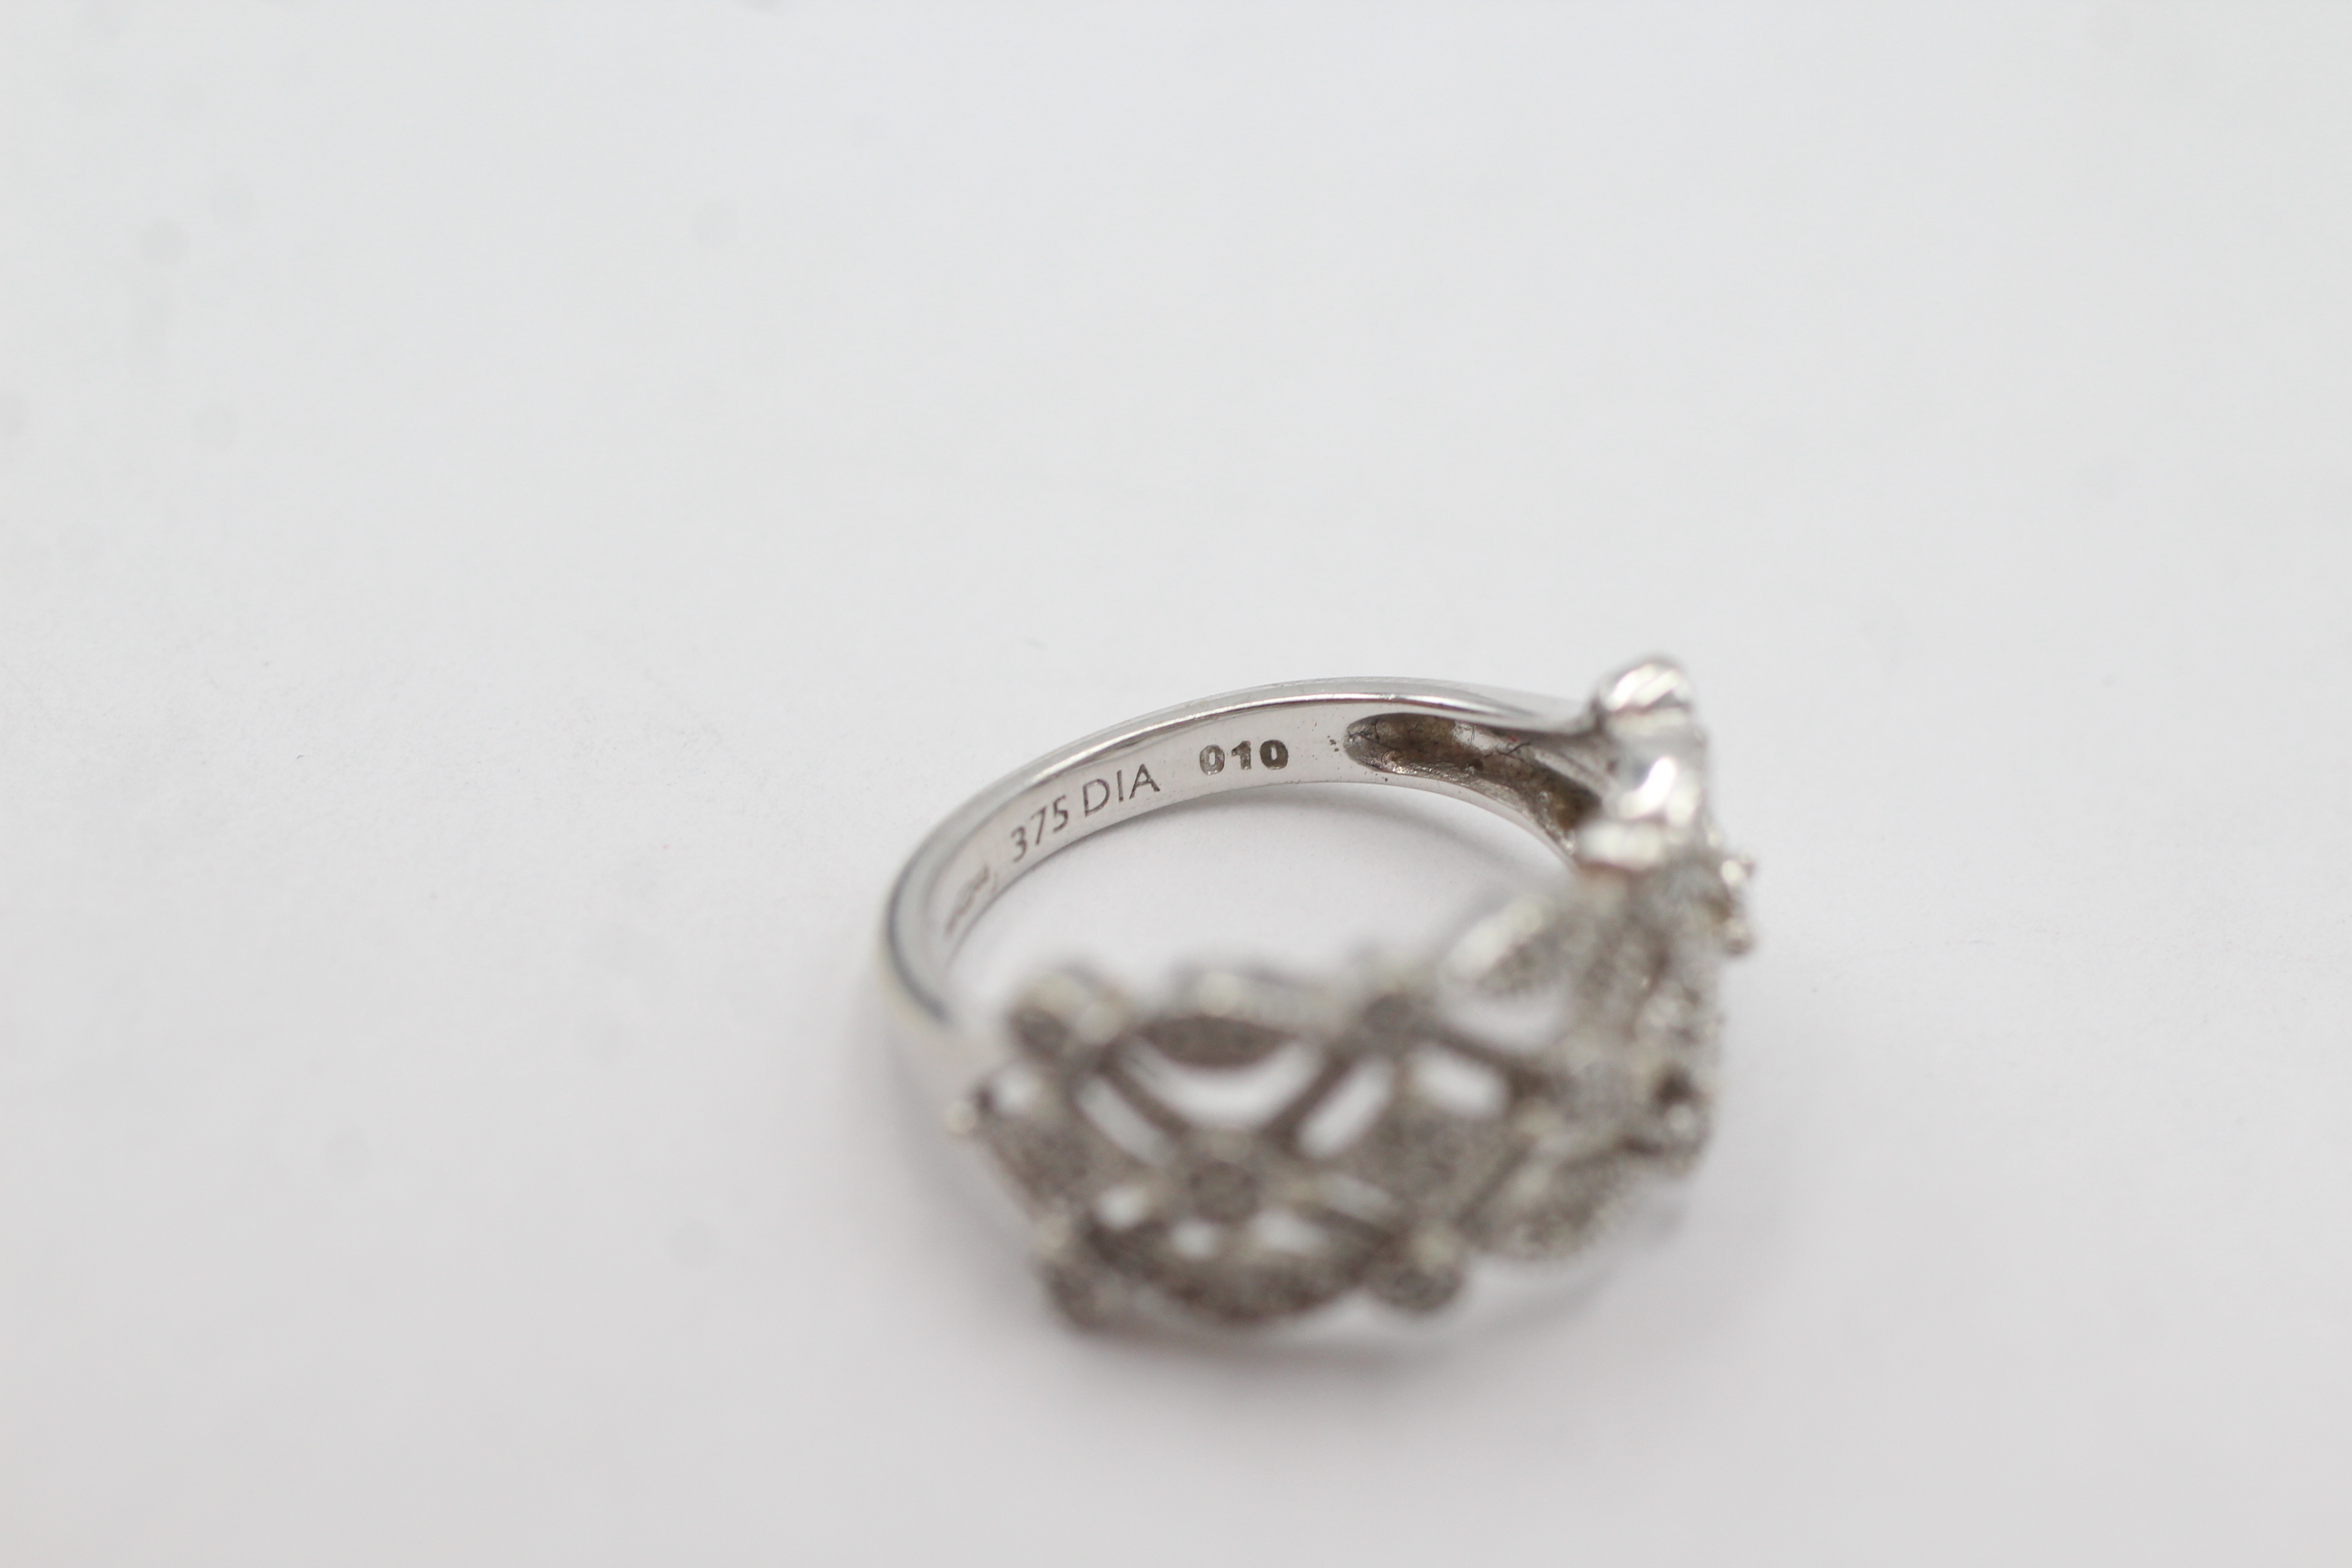 9ct white gold diamond ornate openwork setting dress ring (3.3g) - Image 5 of 5